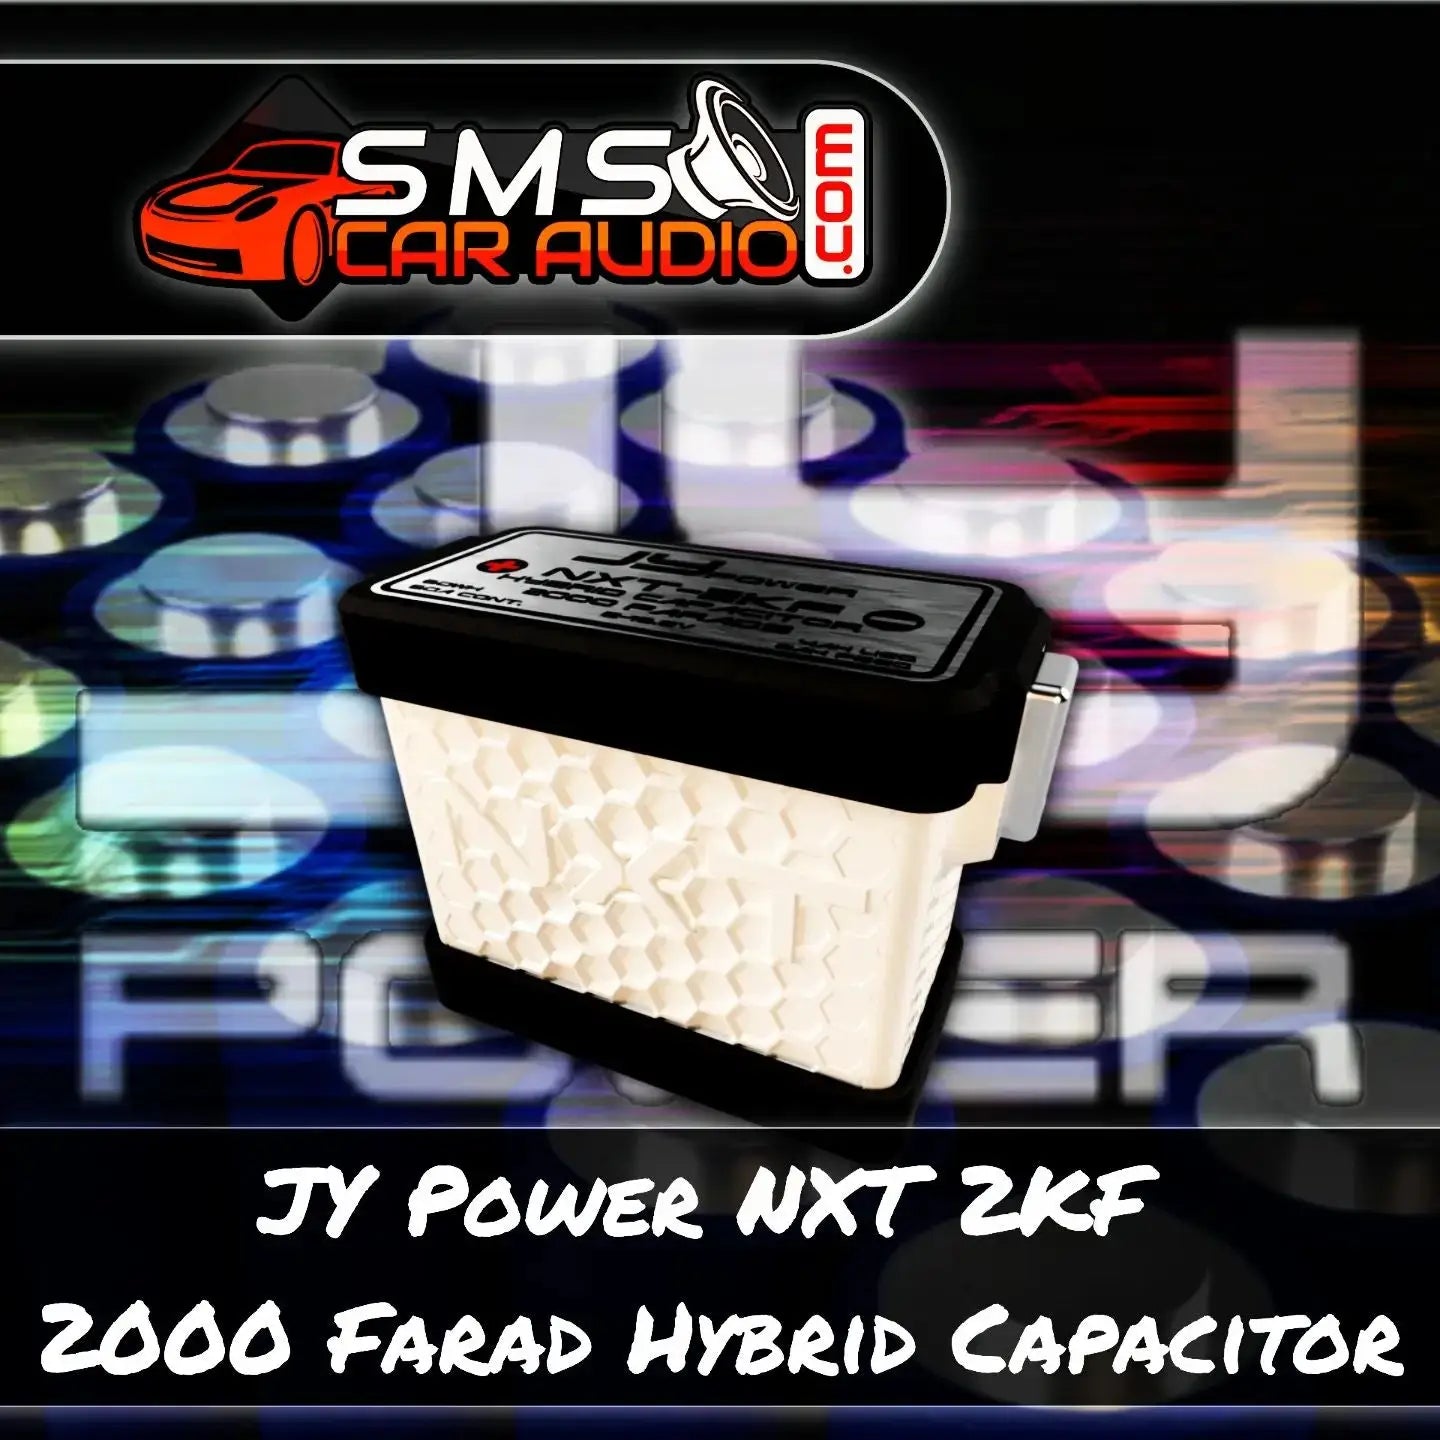 SMS Car Audio: Authorized Dealer of JY Power NXT-2KF Hybrid Capacitors